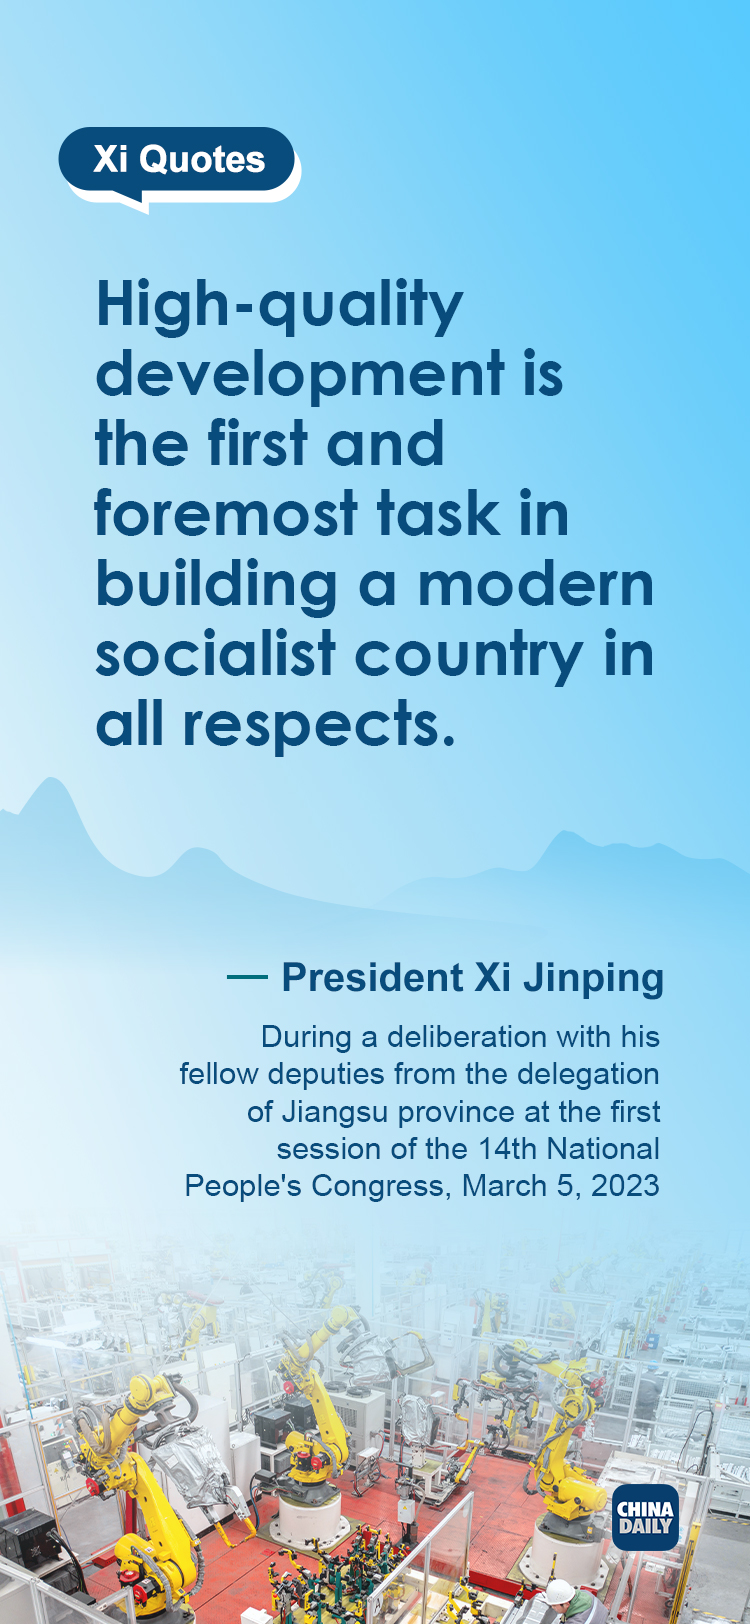 Highlights of Xi's remarks during deliberation with Jiangsu deputies